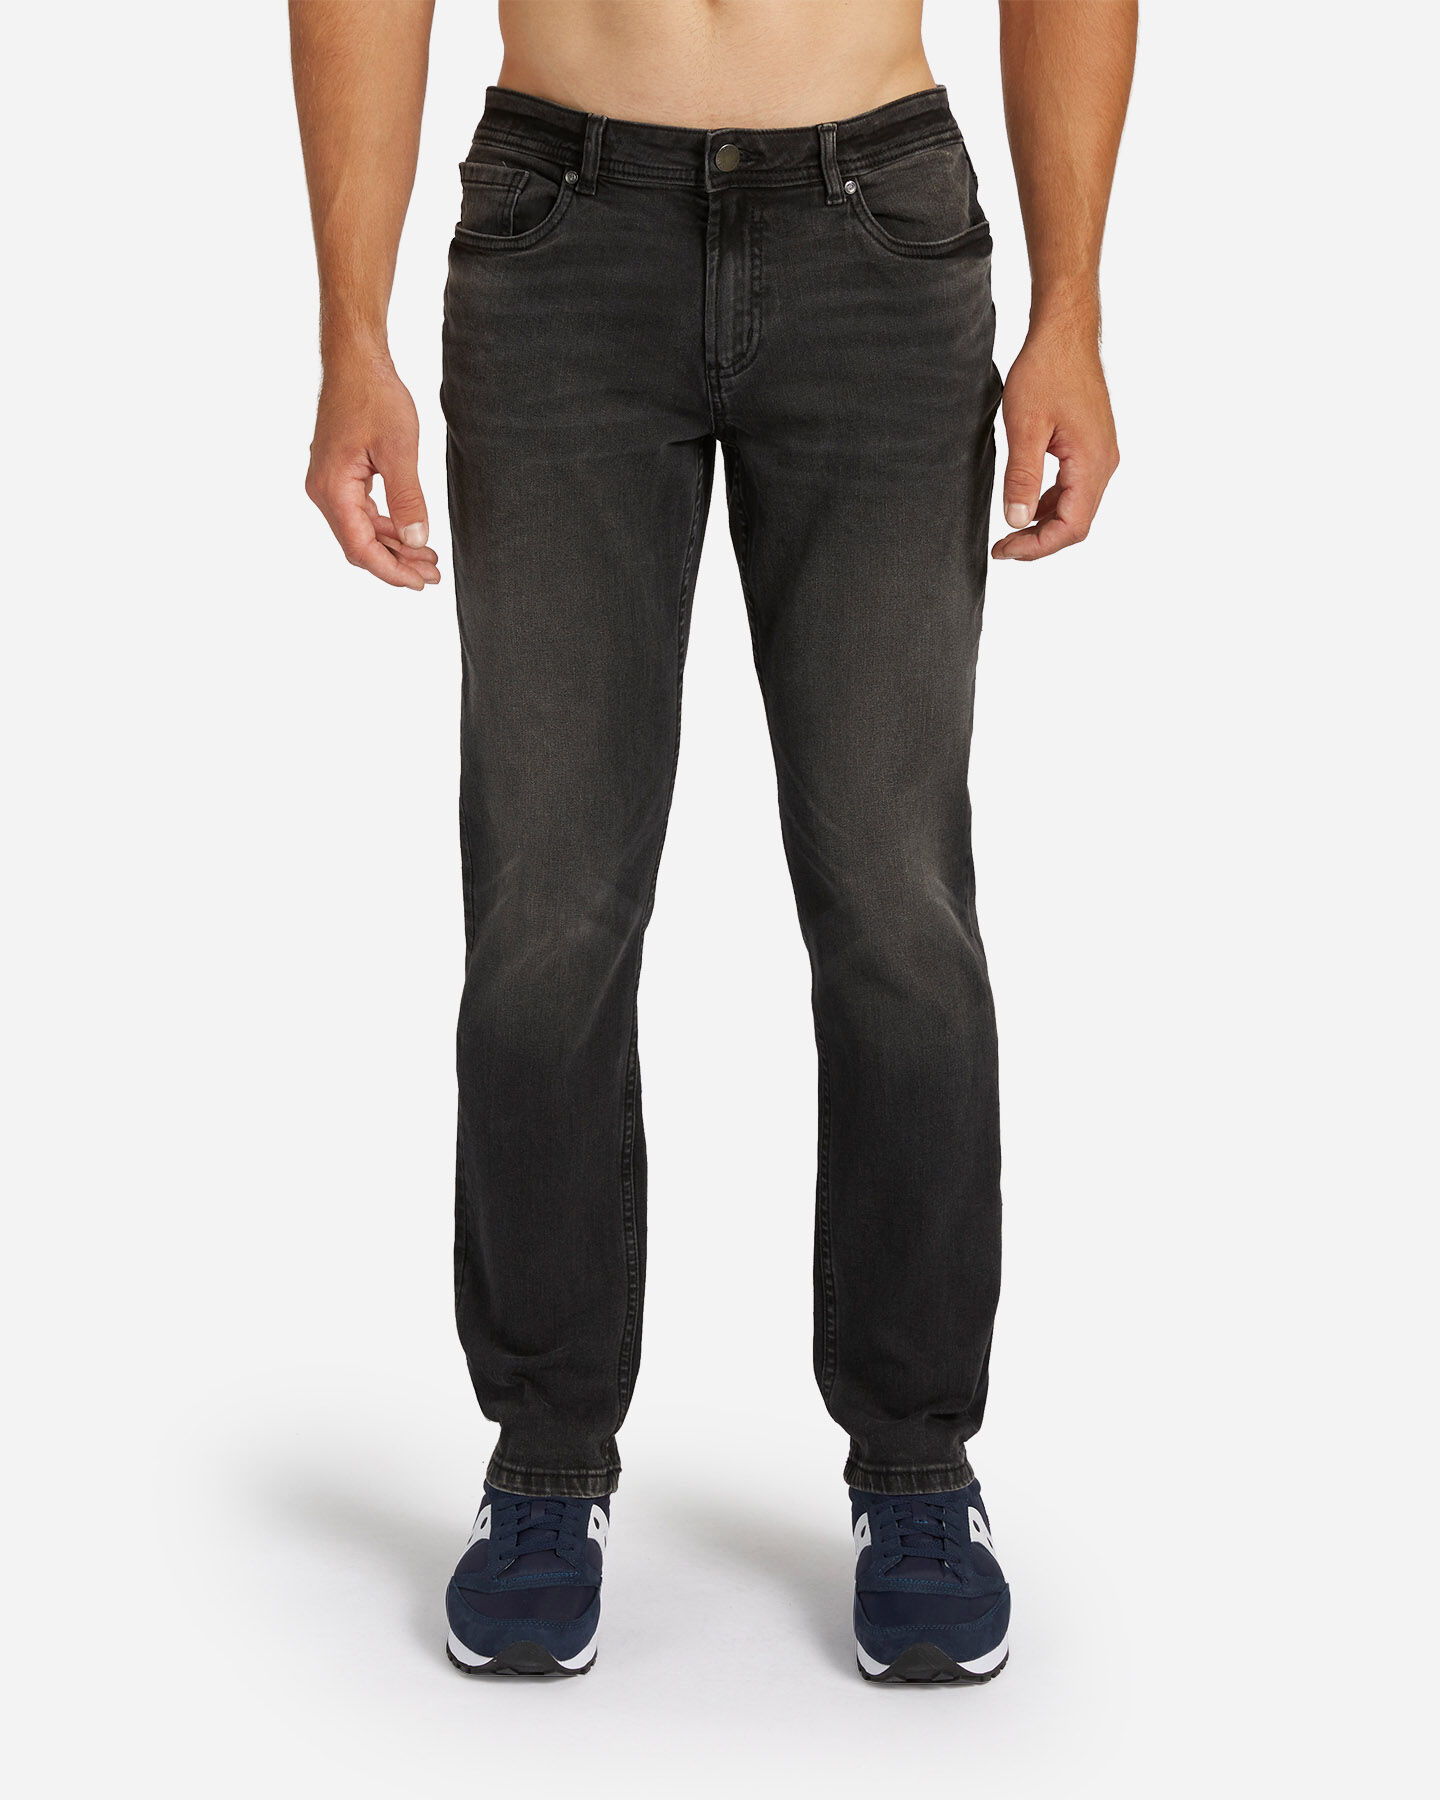  Jeans DACK'S CASUAL CITY M S4106792|DD|56 scatto 0